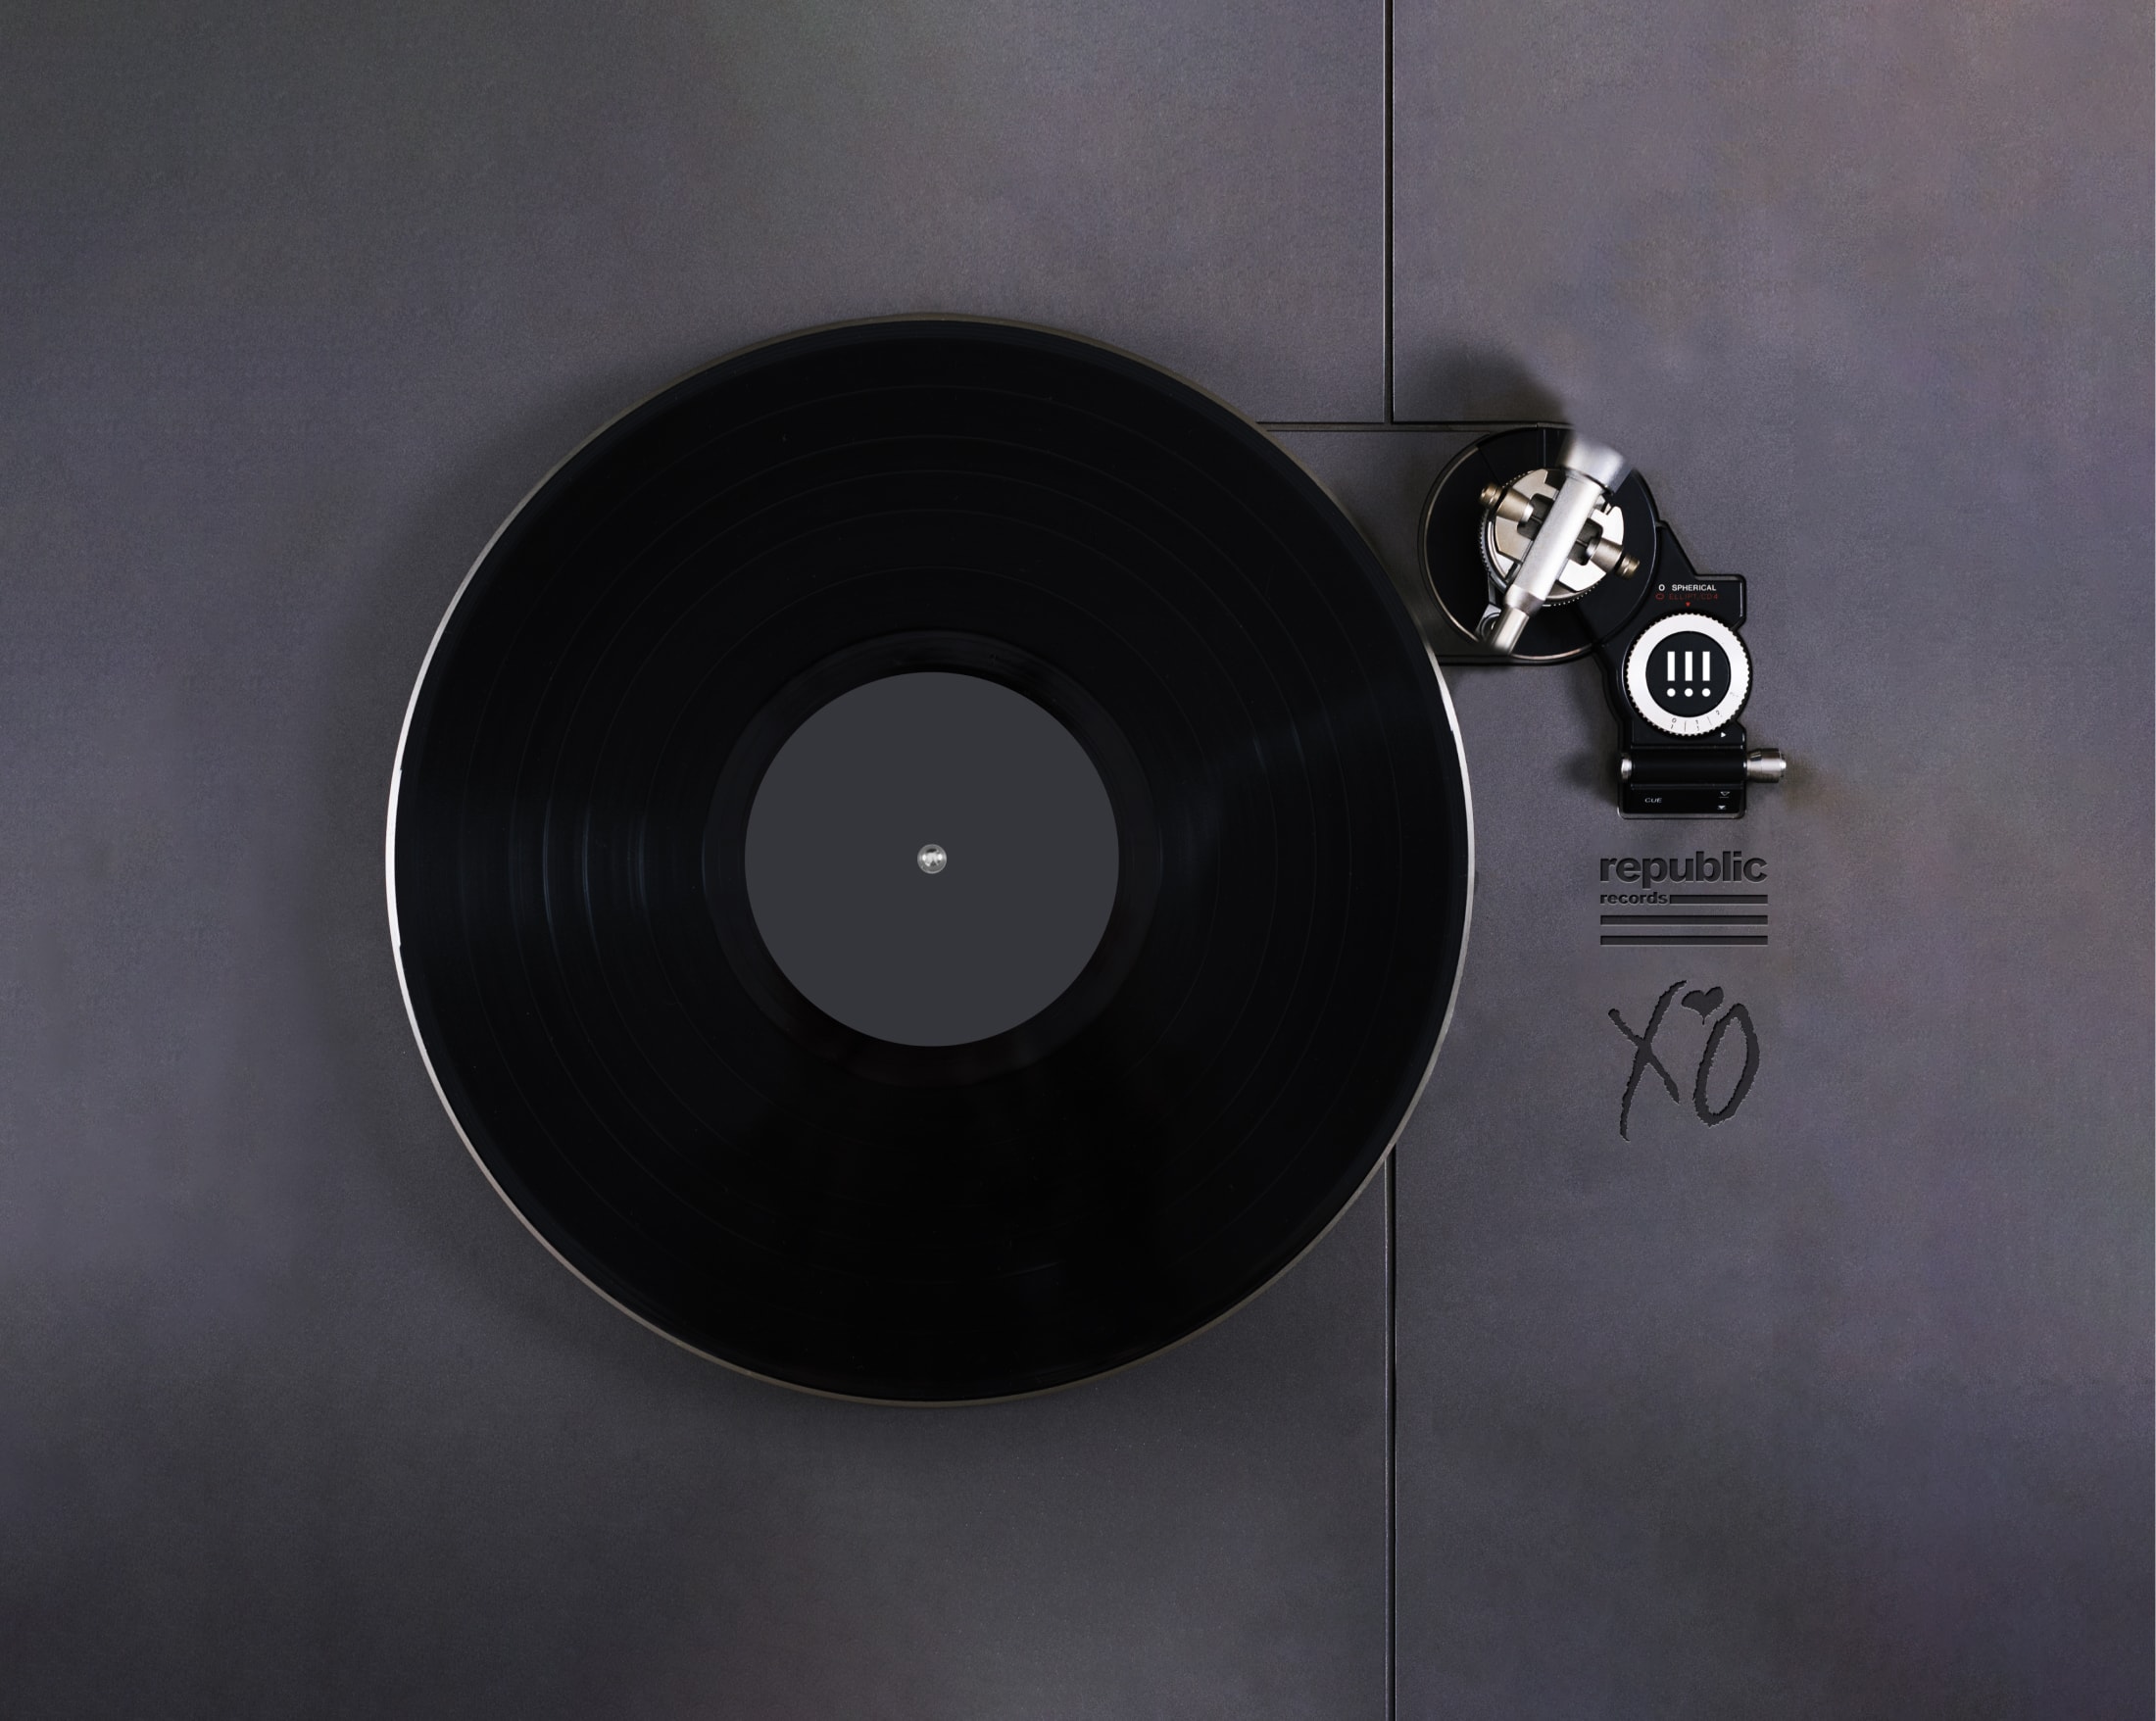 The Weeknd creates limited vinyl run pressed on saw blade - News